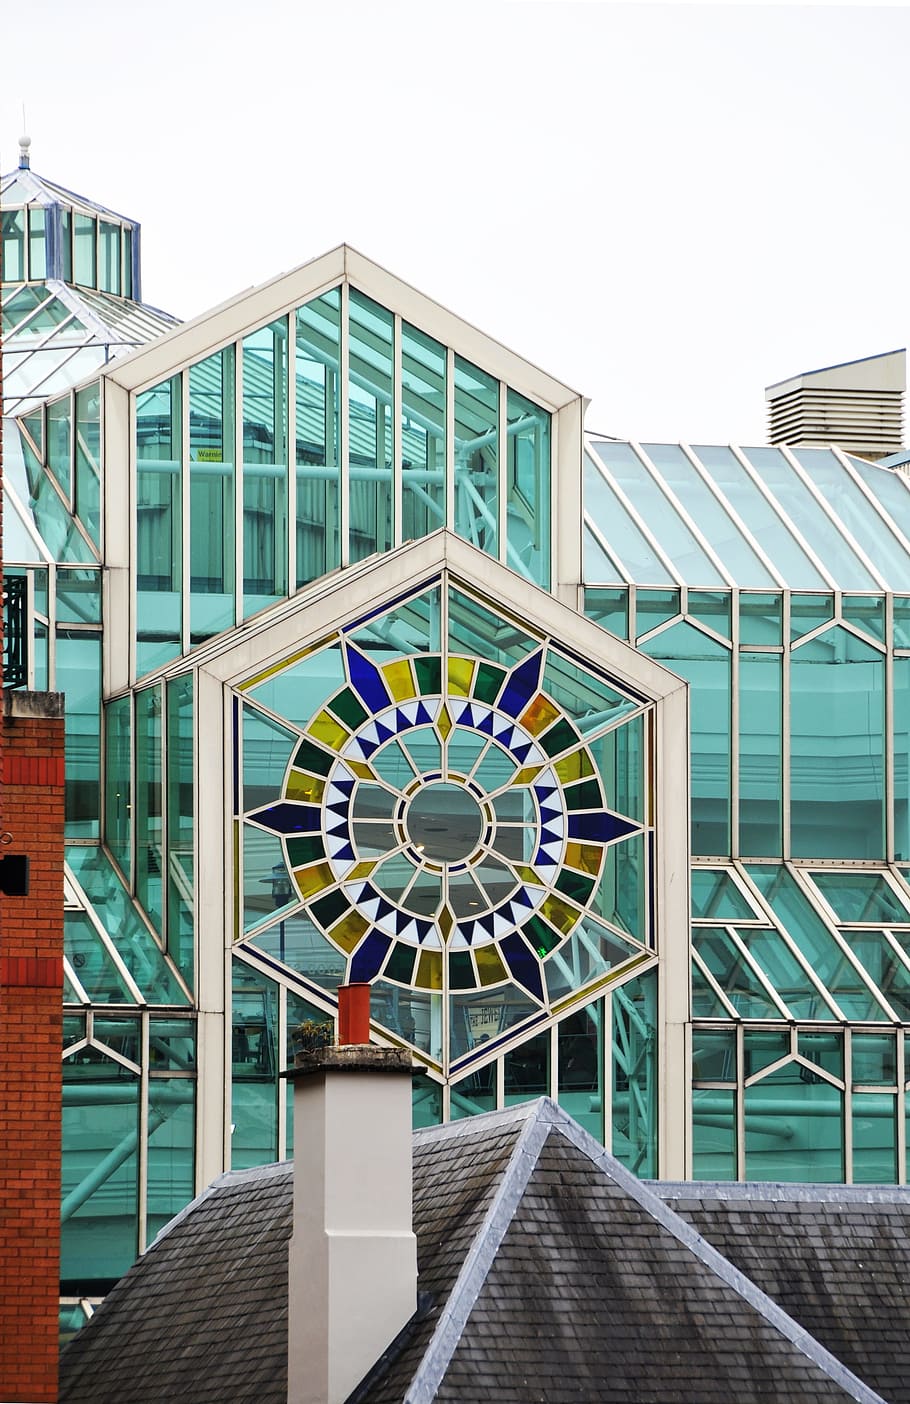 vidrio, arquitectura, vidrieras, transparencia, centro comercial, Bristol, Inglaterra, estructura construida, exterior del edificio, cielo